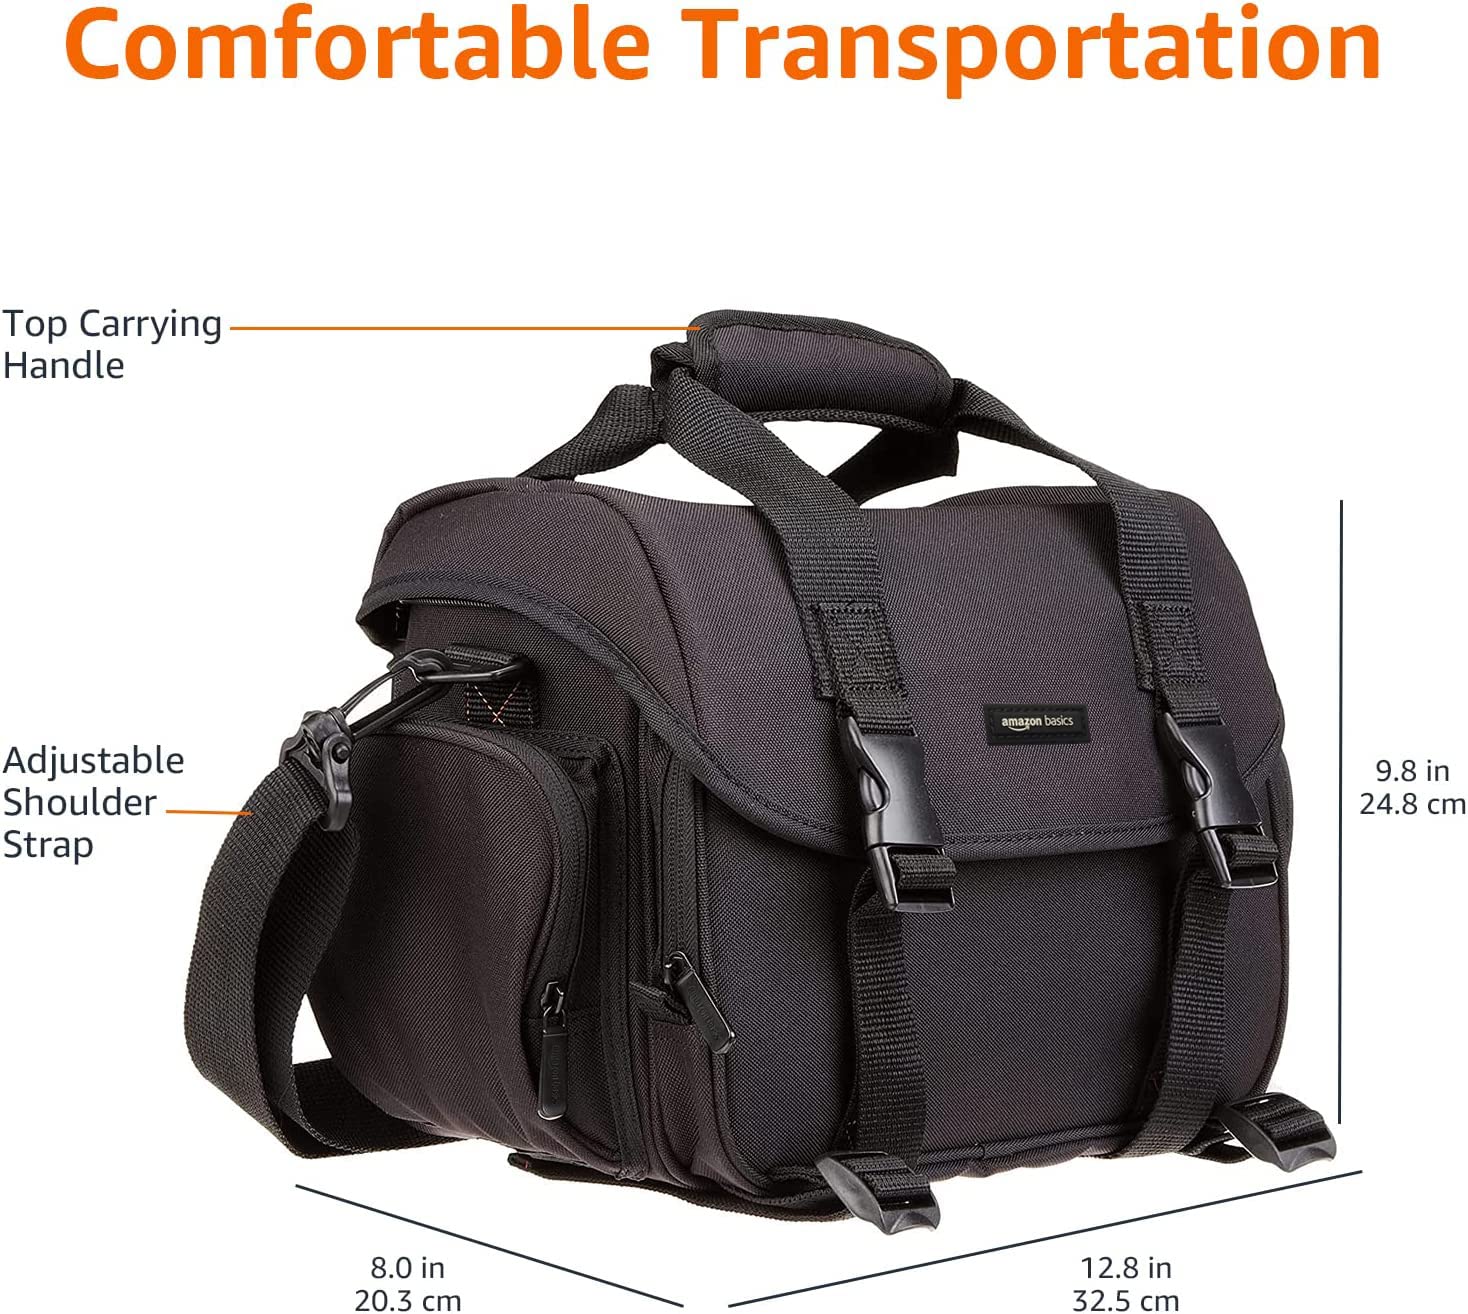 Amazon Basics Large DSLR Gadget Bag, Black with Orange Interior